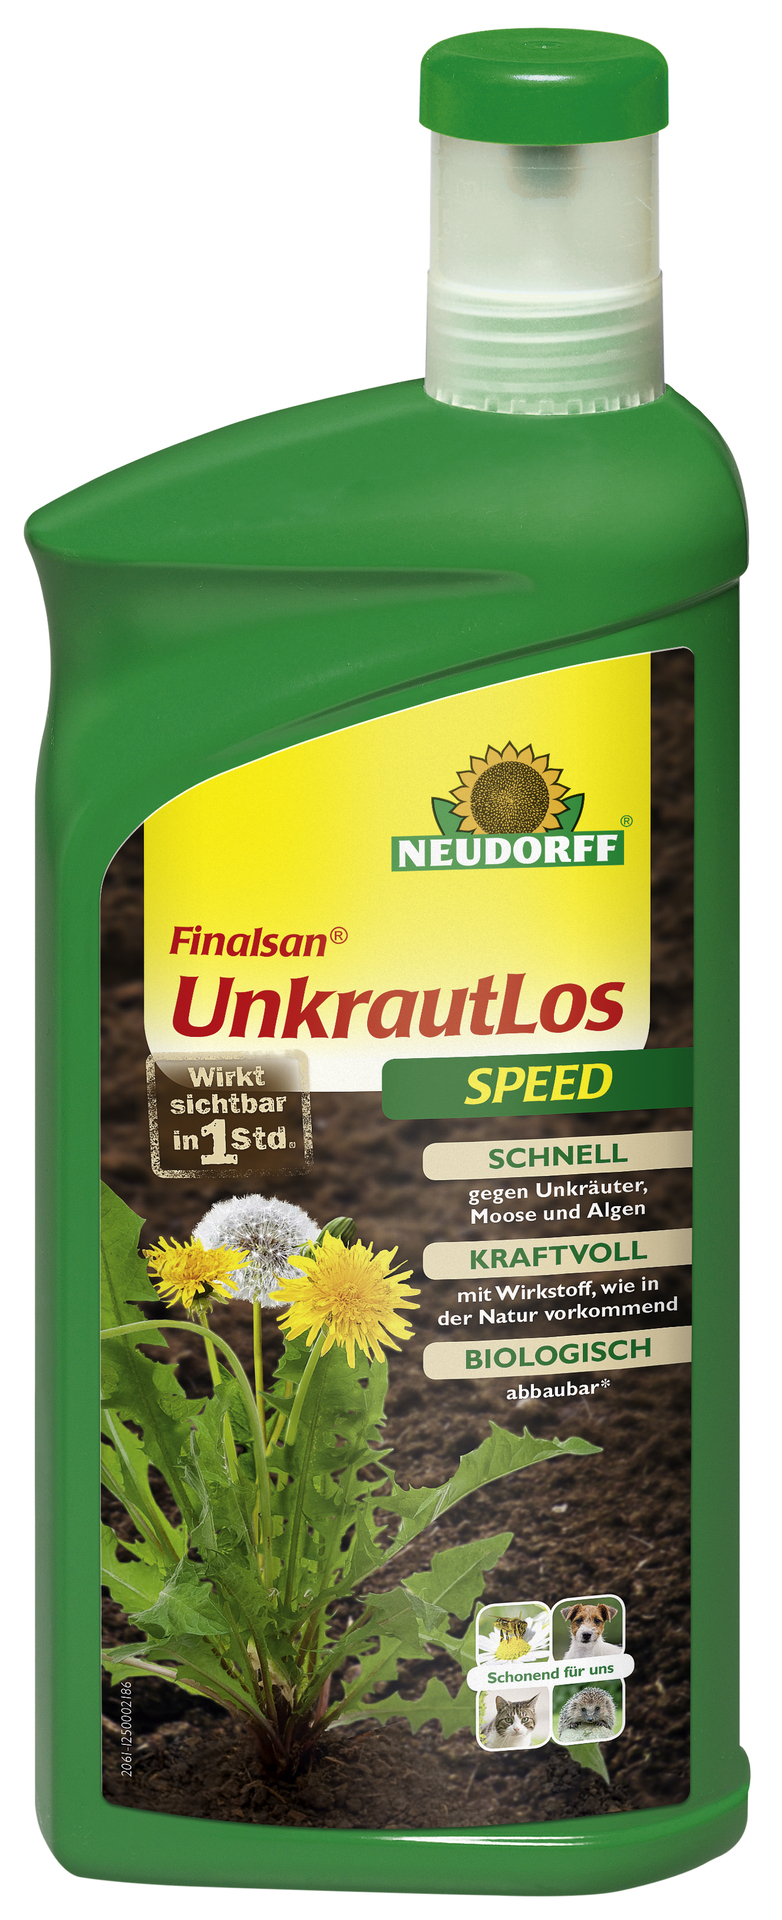 Neudorff Finalsan UnkrautLos Speed